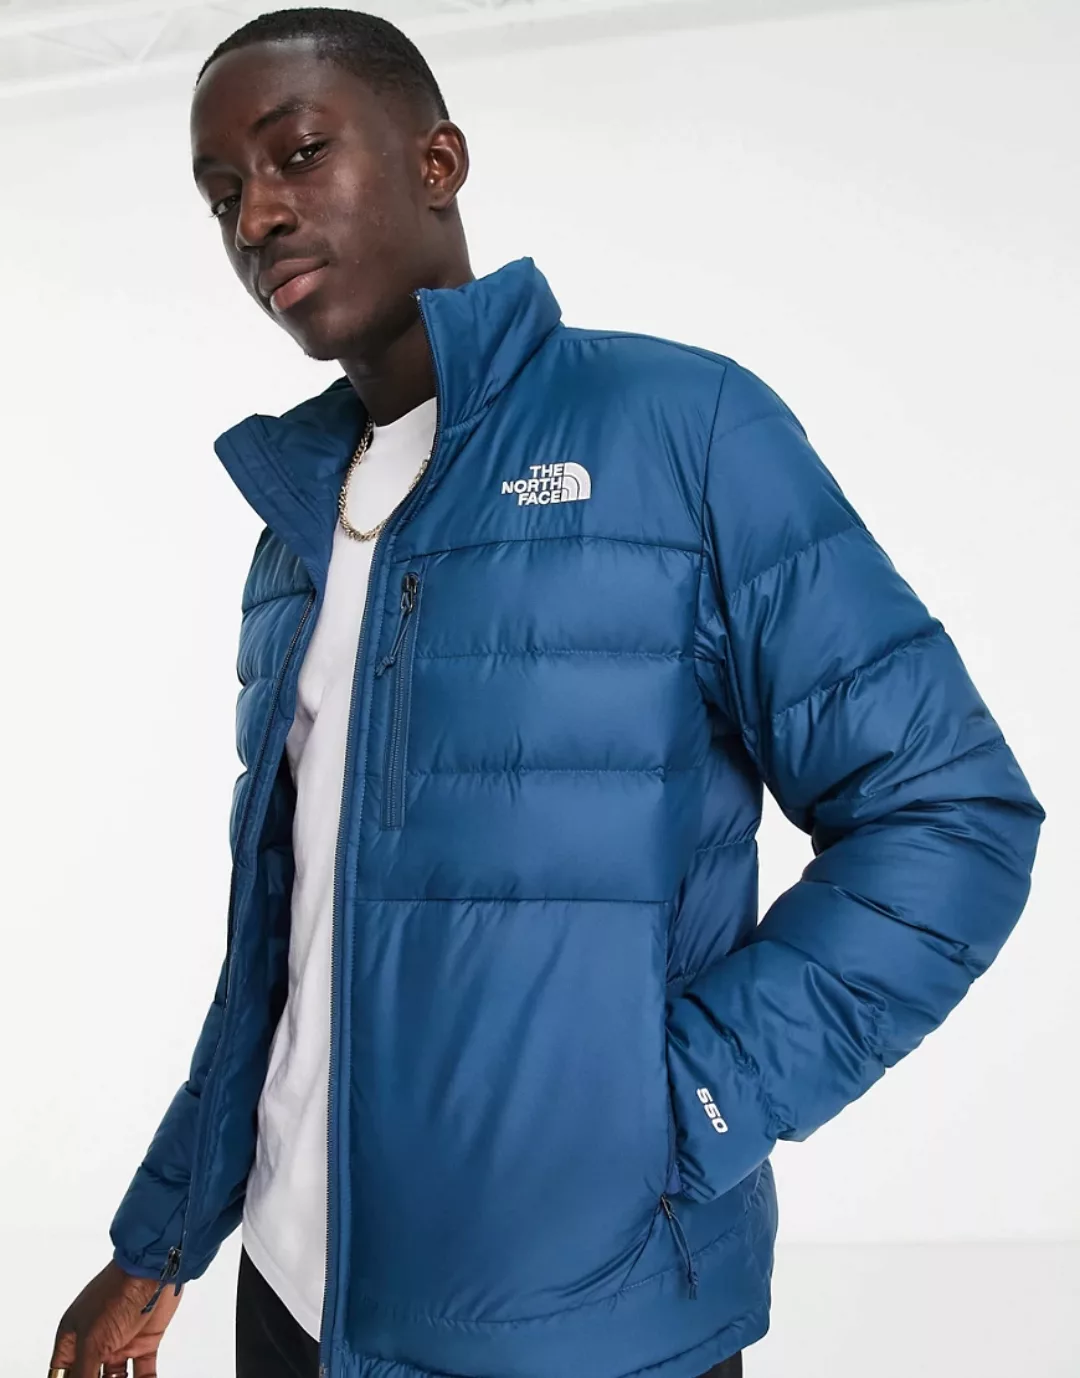 The North Face – Aconcagua 2 – Jacke in Blau günstig online kaufen